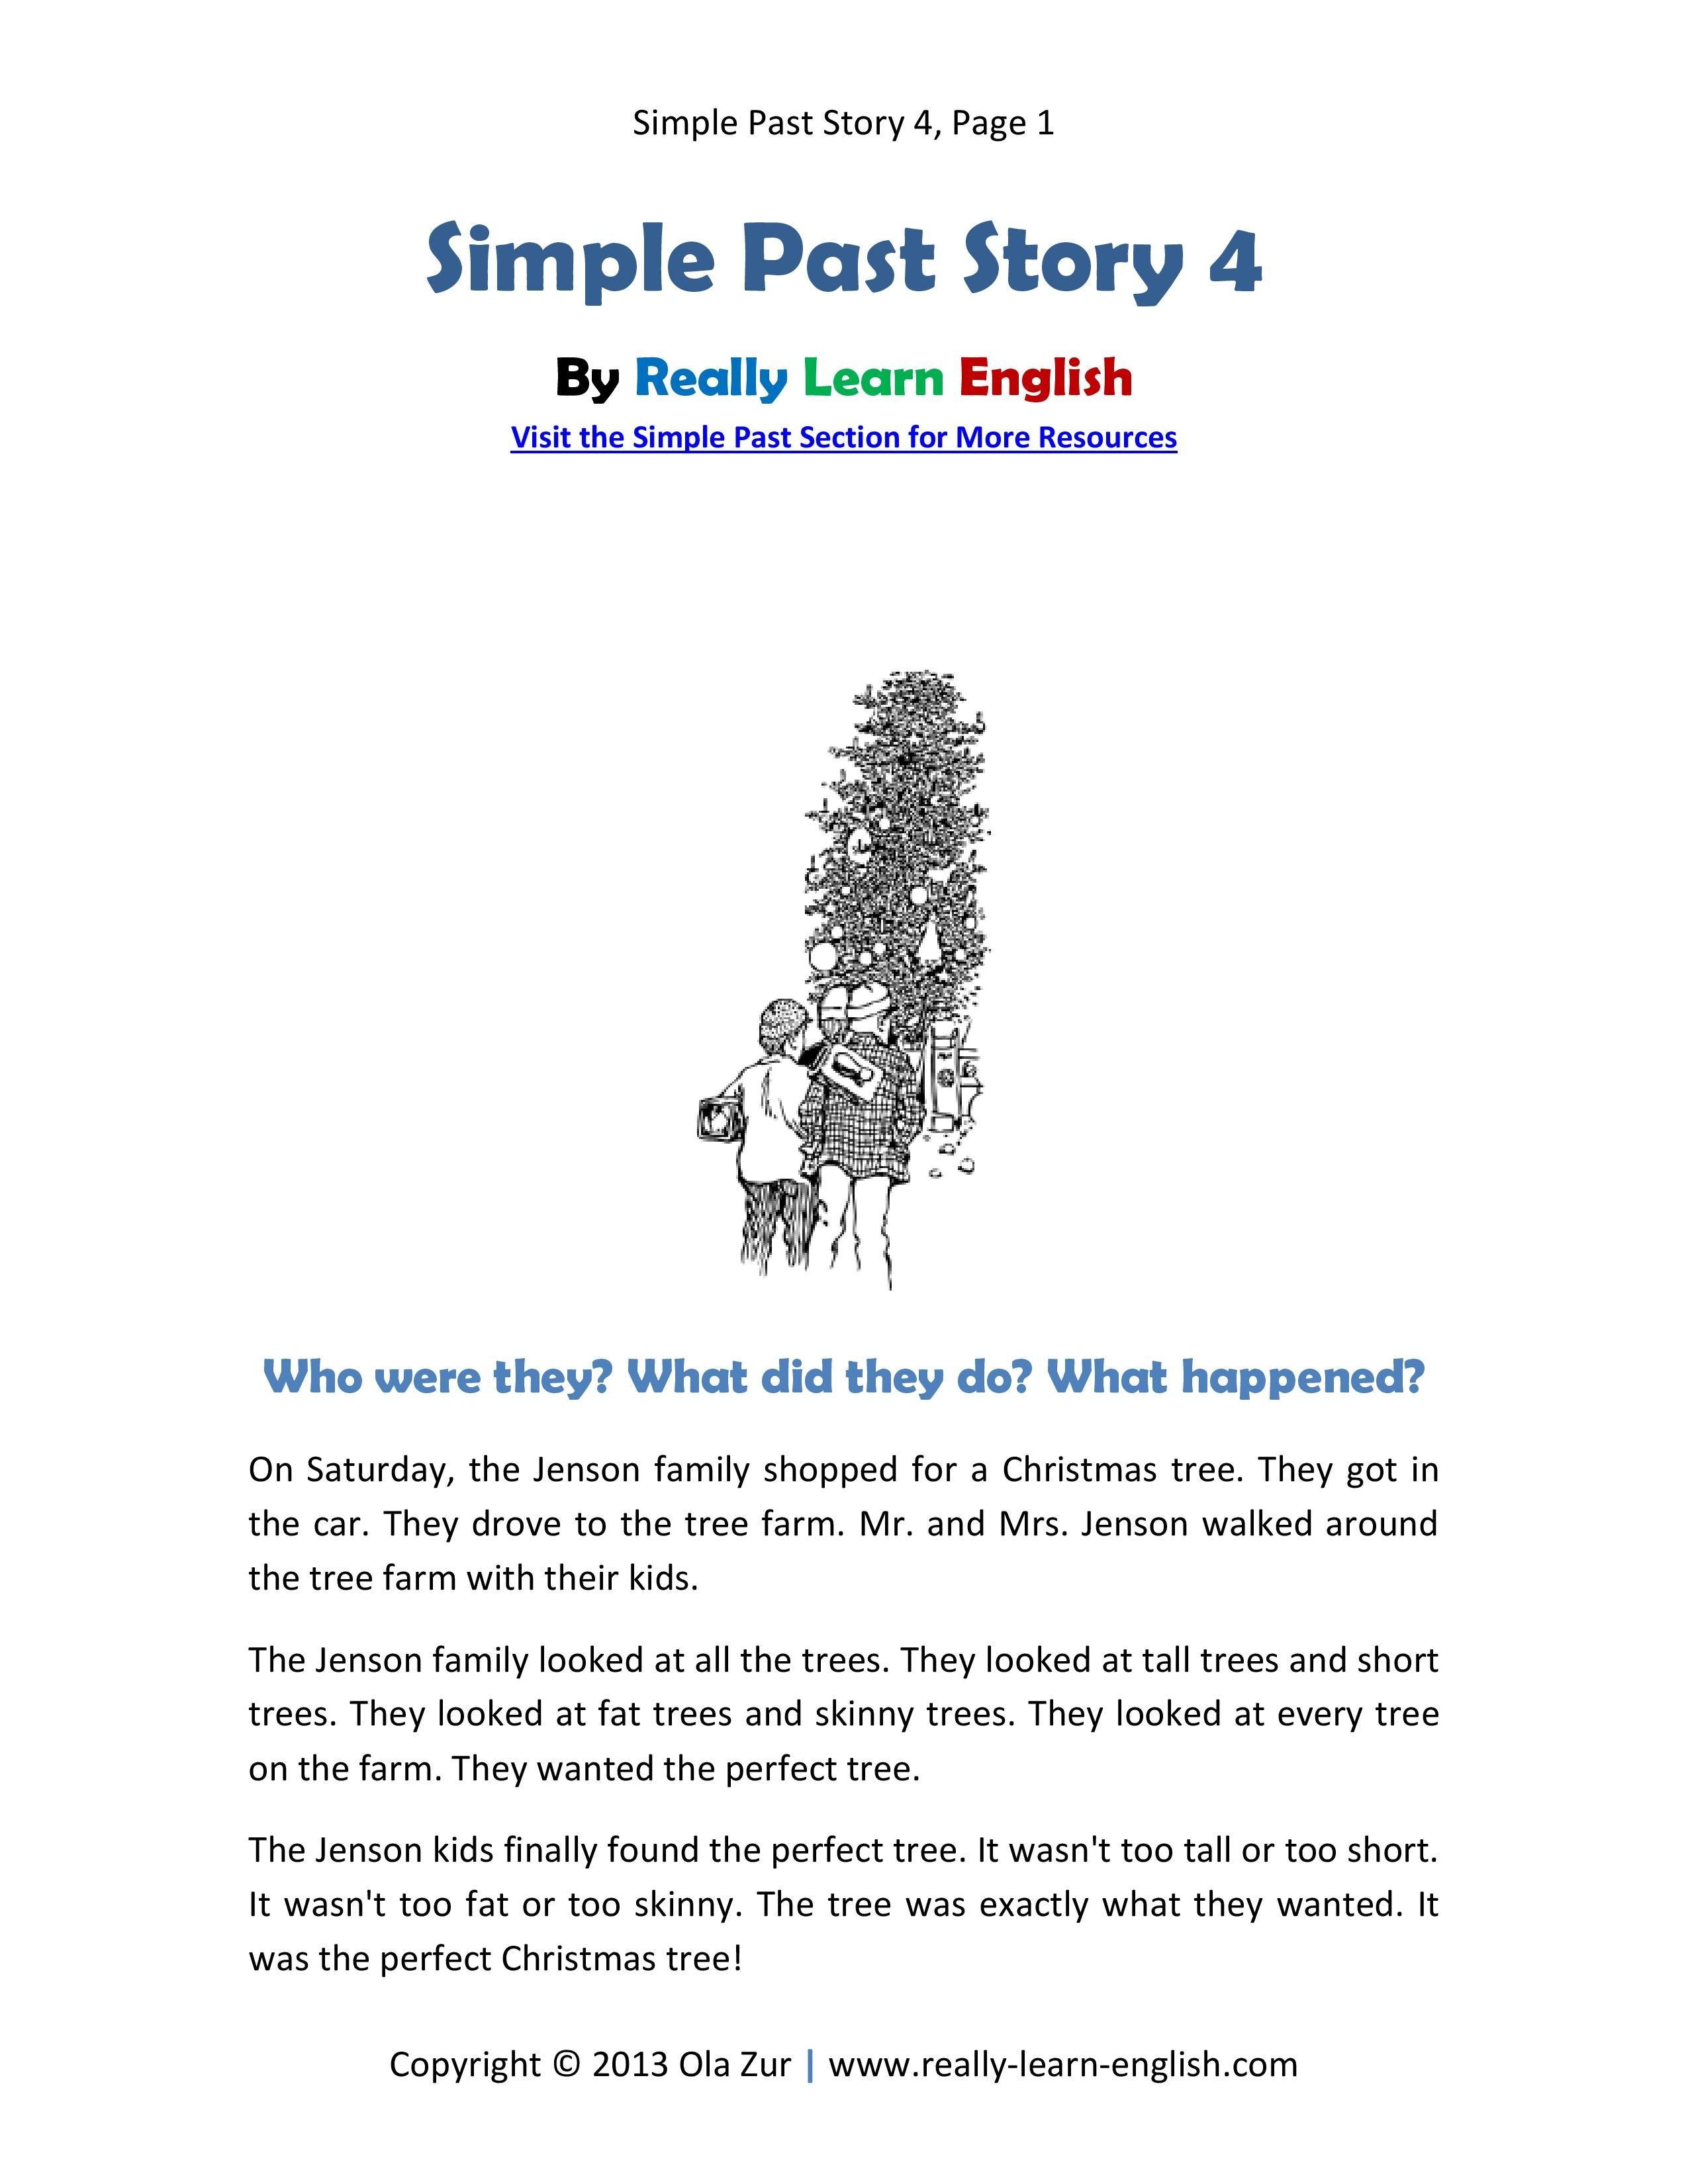 Practice The Simple Past Tense. Free, Printable Short Story - Free Printable Short Stories For High School Students